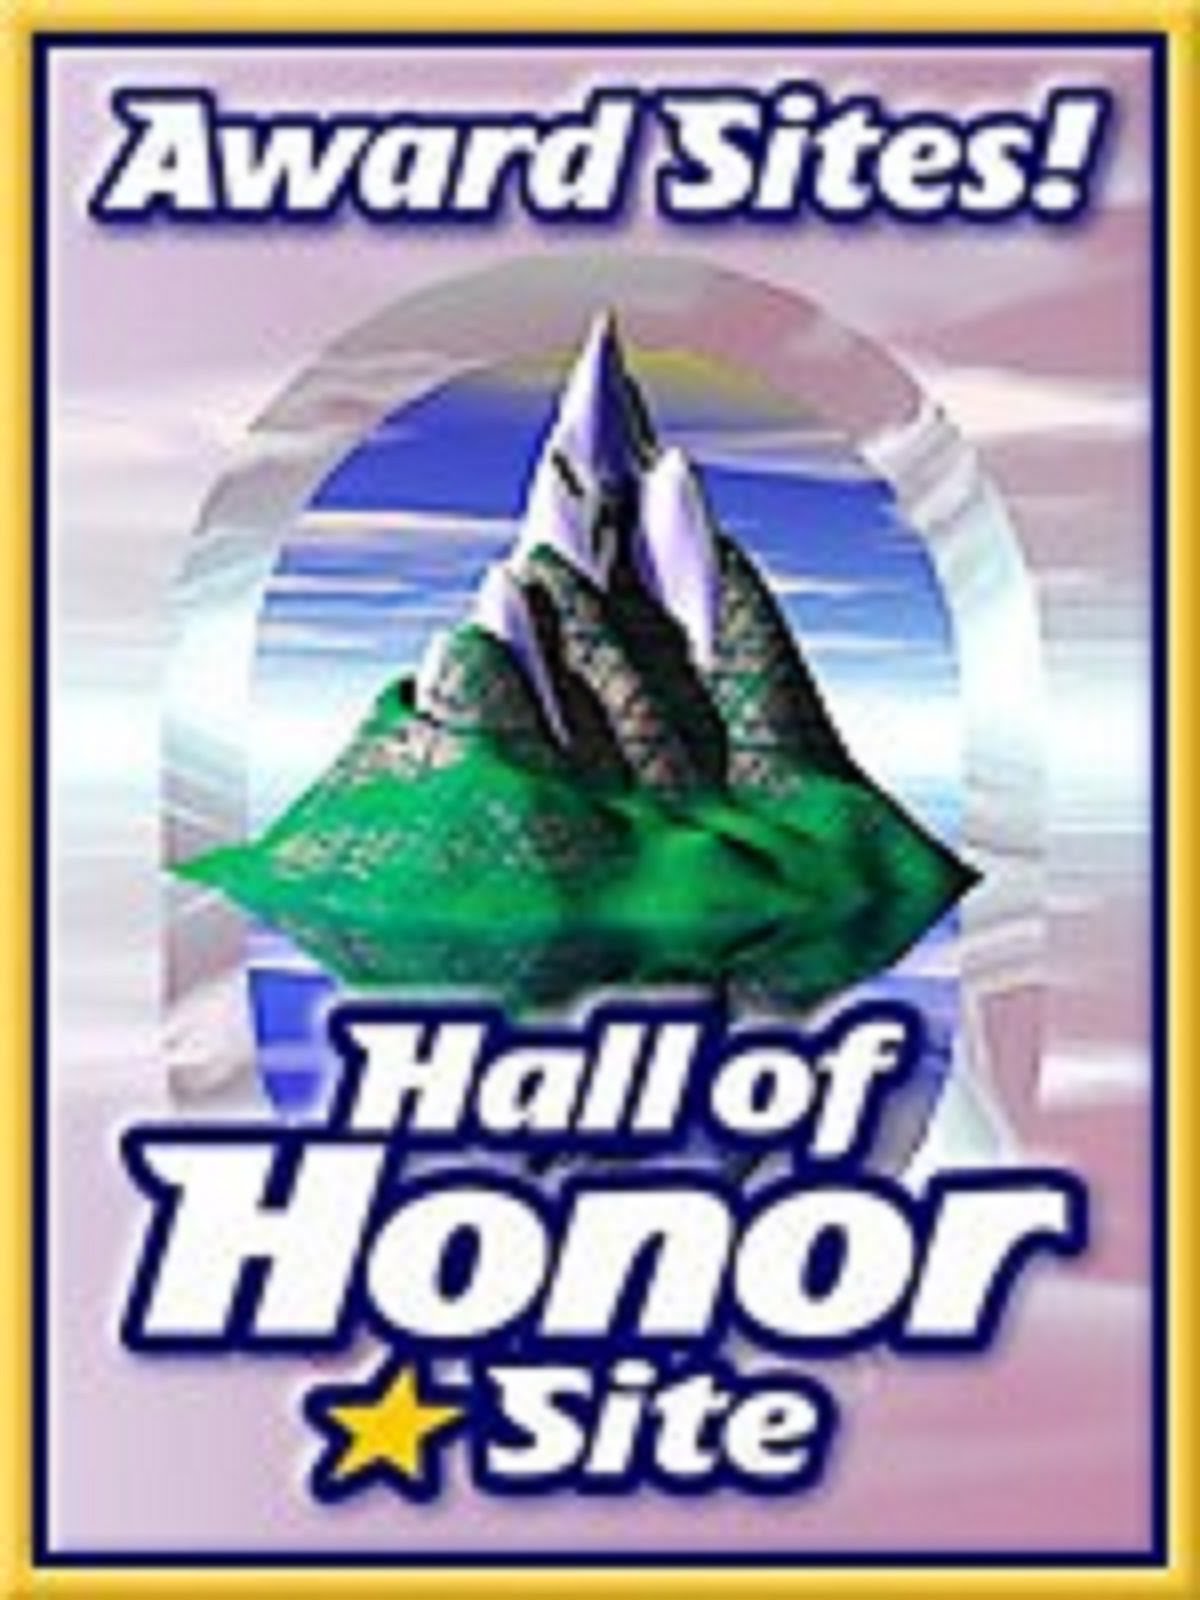 HALL OF HONOR AWARD SITE